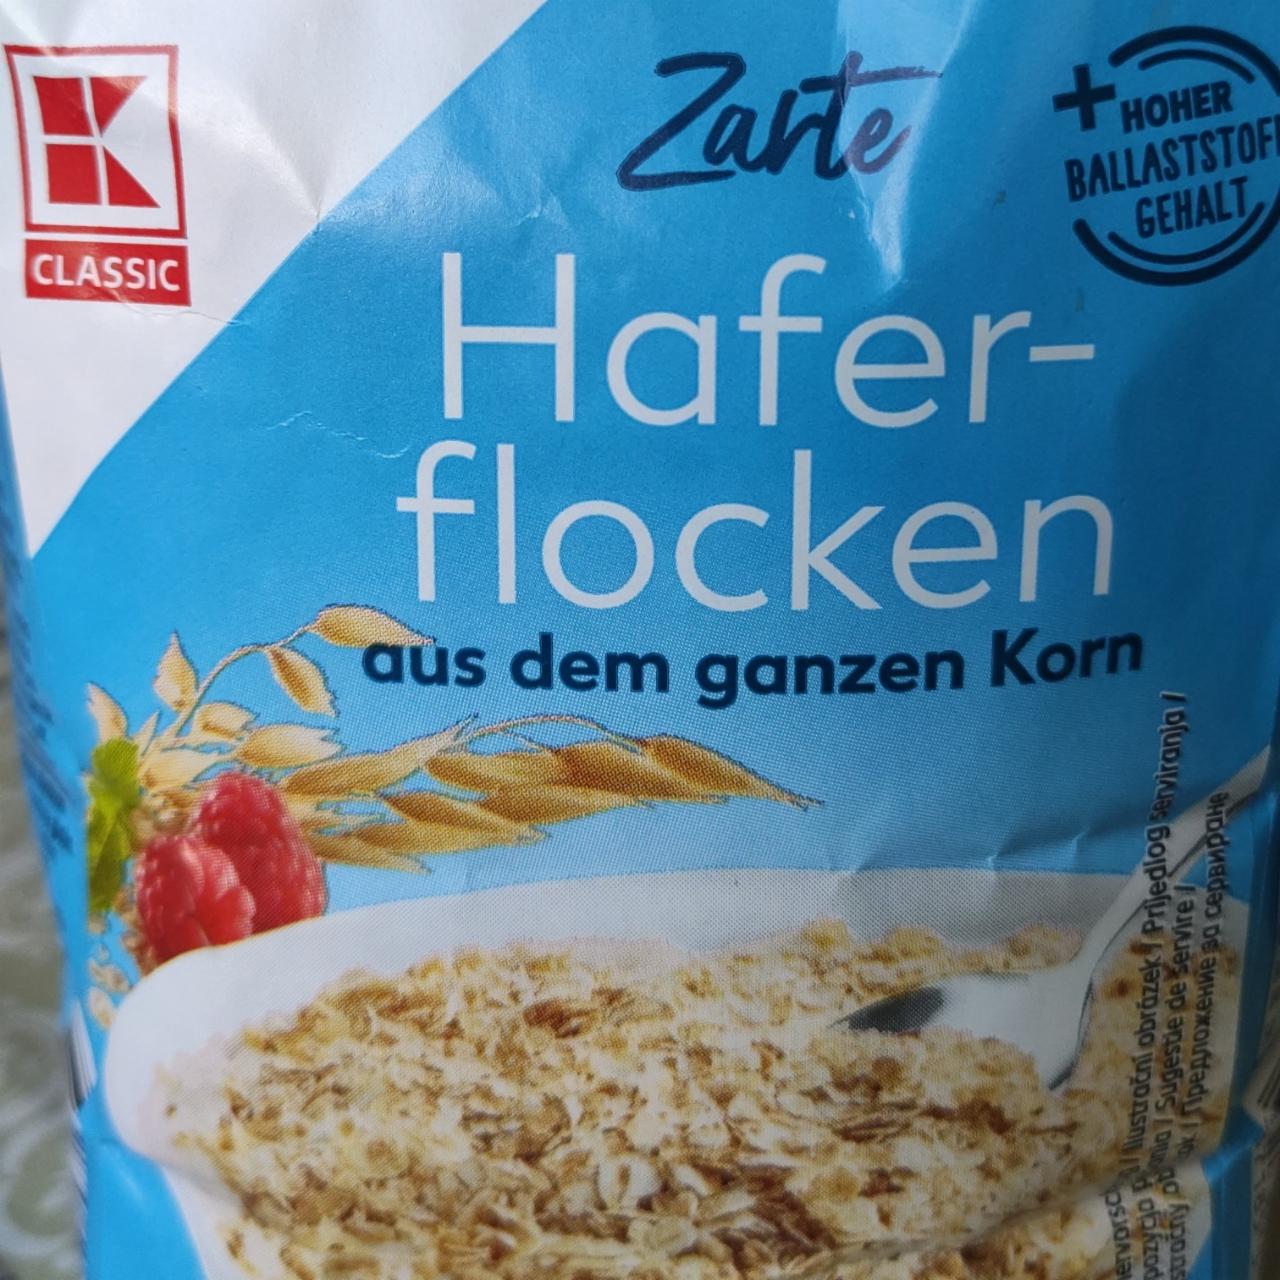 Zdjęcia - Hafer-flocken K-Classic